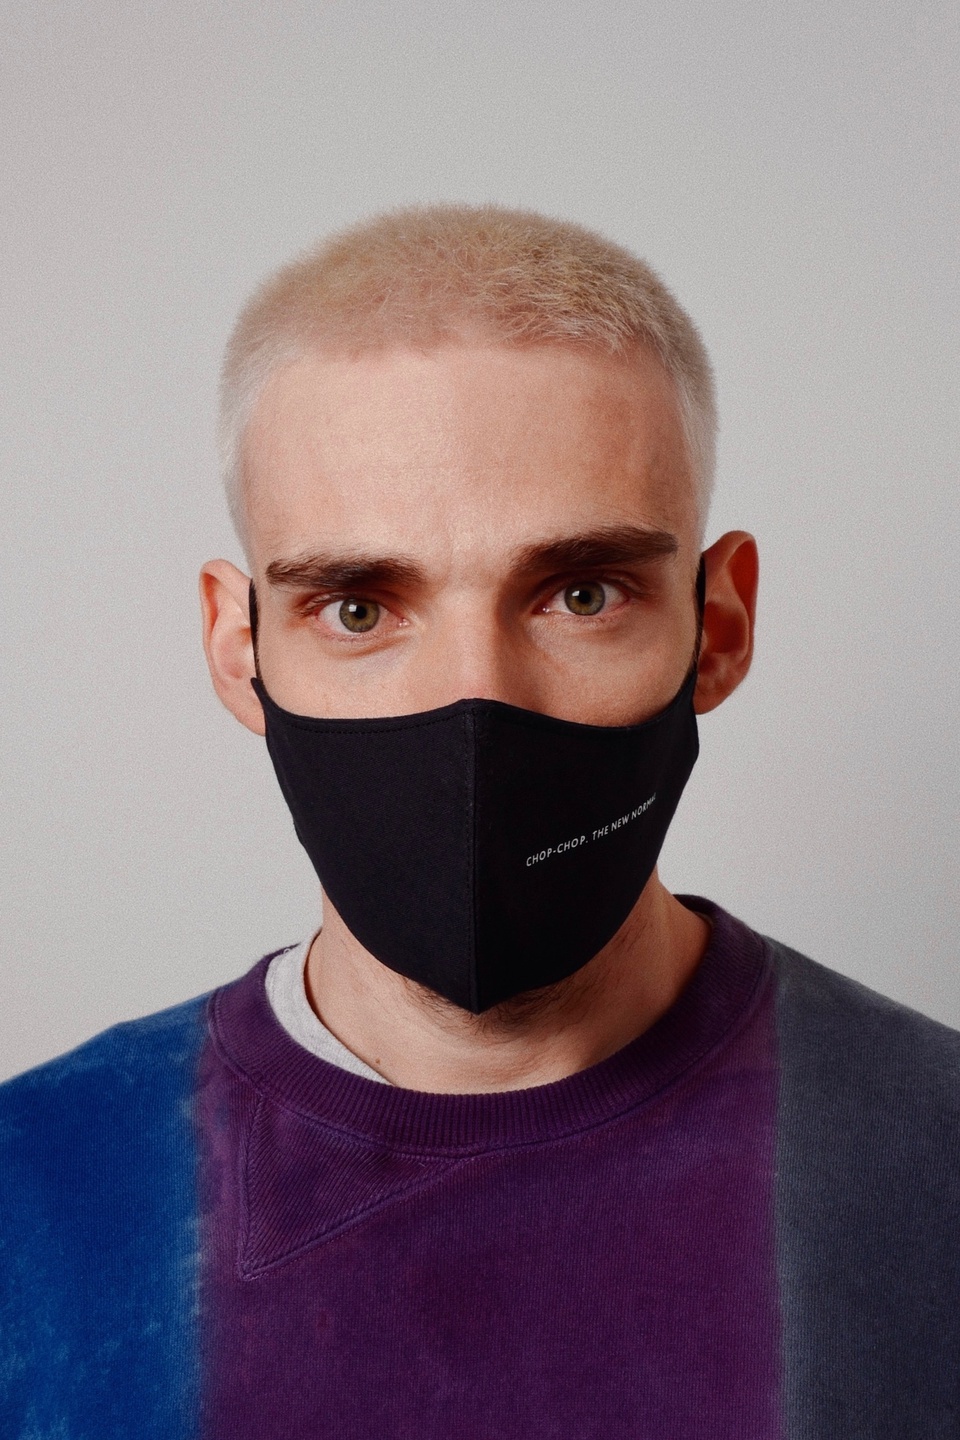 Хлопковая маска для лица The New Normal - 350 ₽, заказать онлайн.